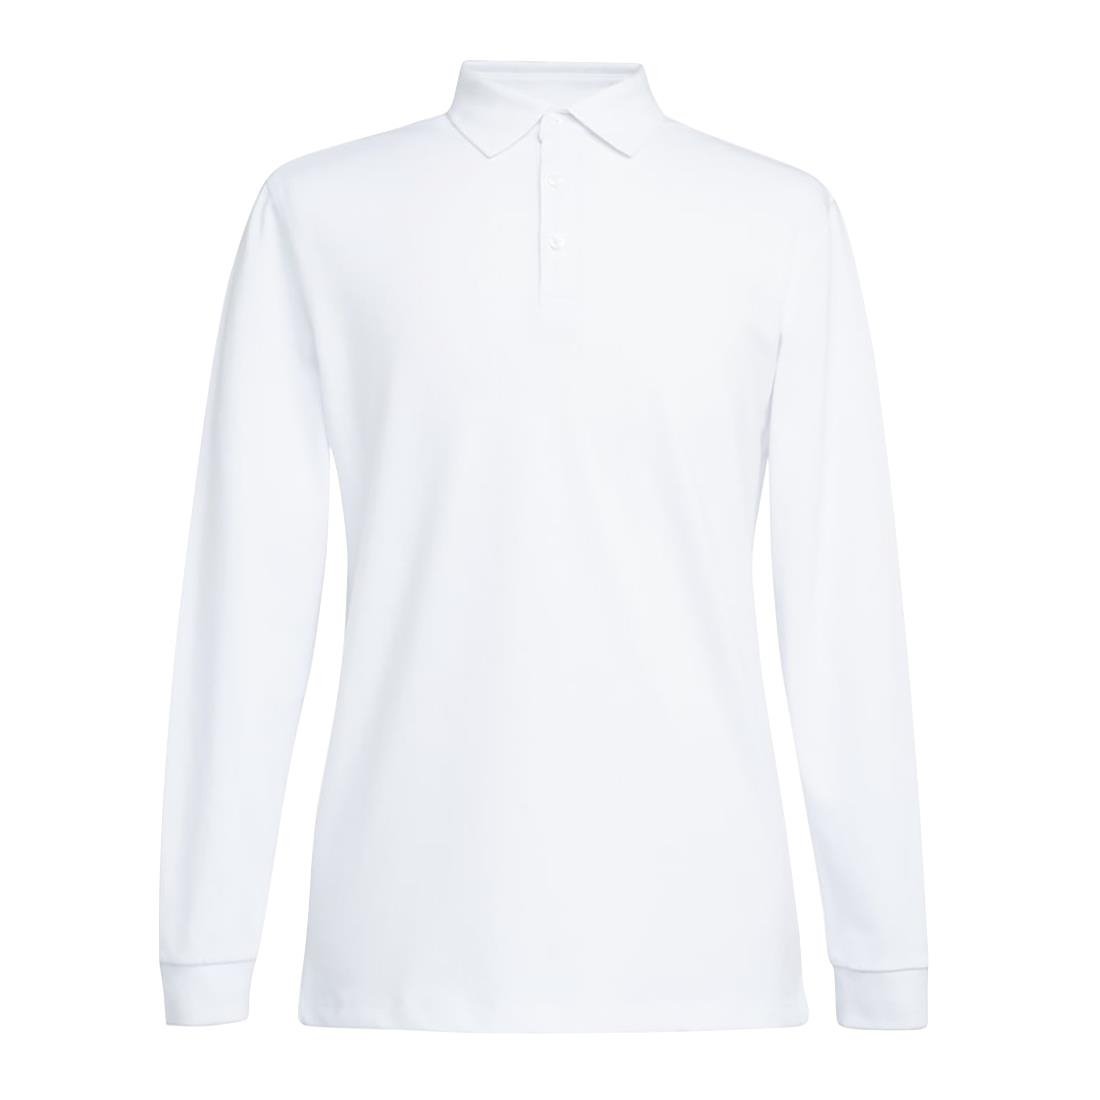 BA140-XXL Brook Taverner Frederick Mens Long Sleeve Polo Shirt White Size XXL